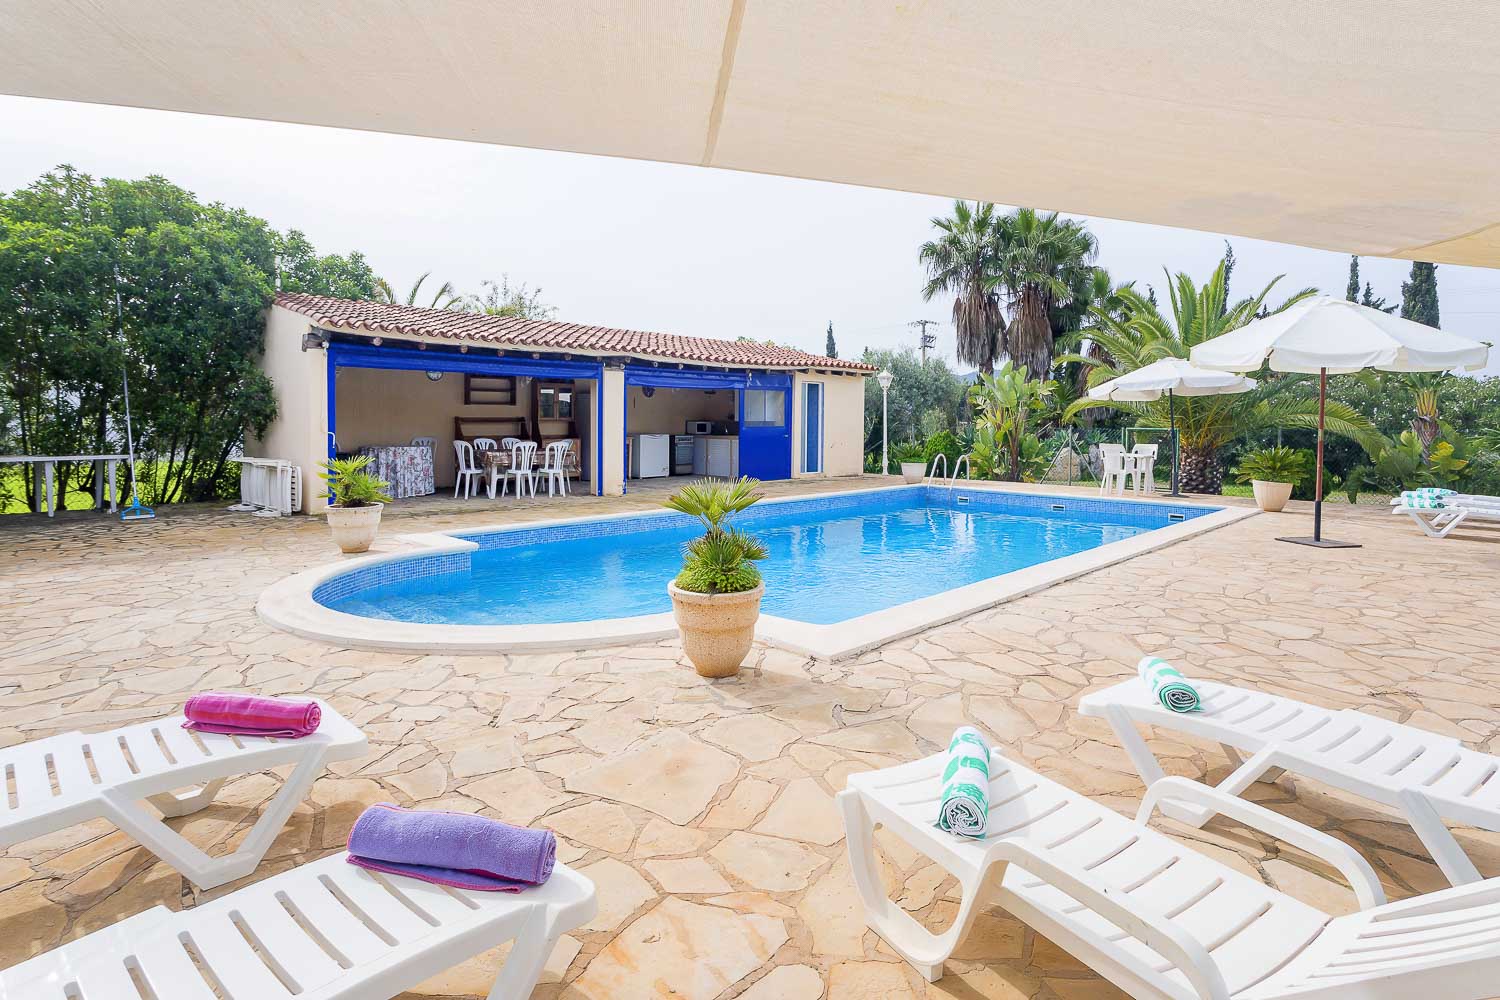 Pool zone in a rental house in Ibiza